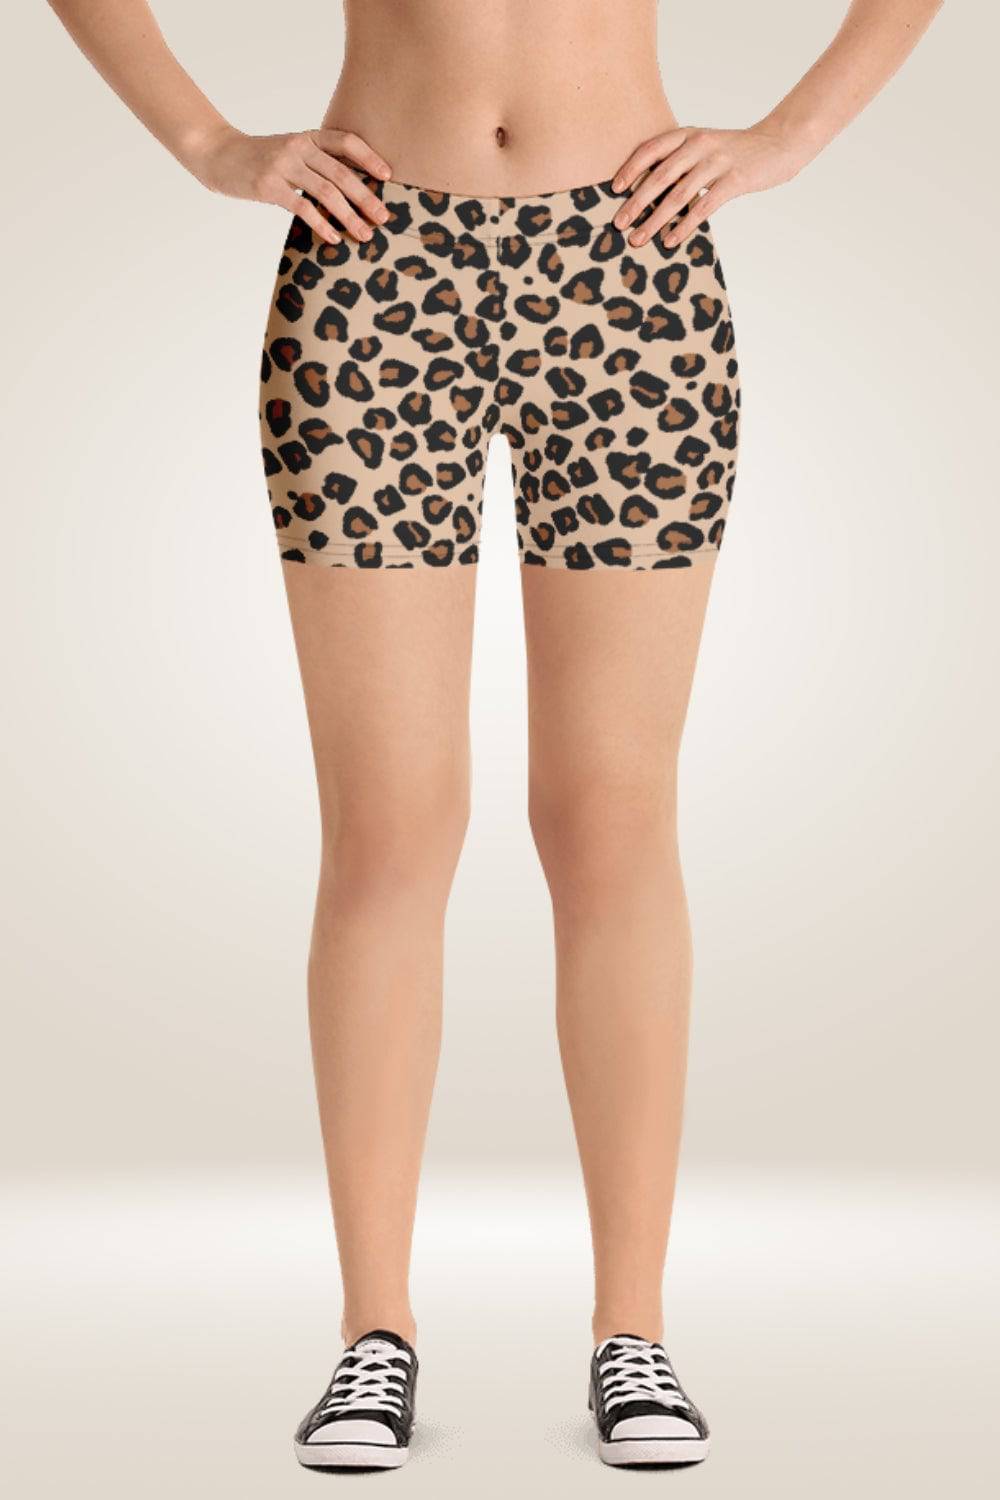 Leopard Print Yoga Shorts - TGC Boutique - Shorts